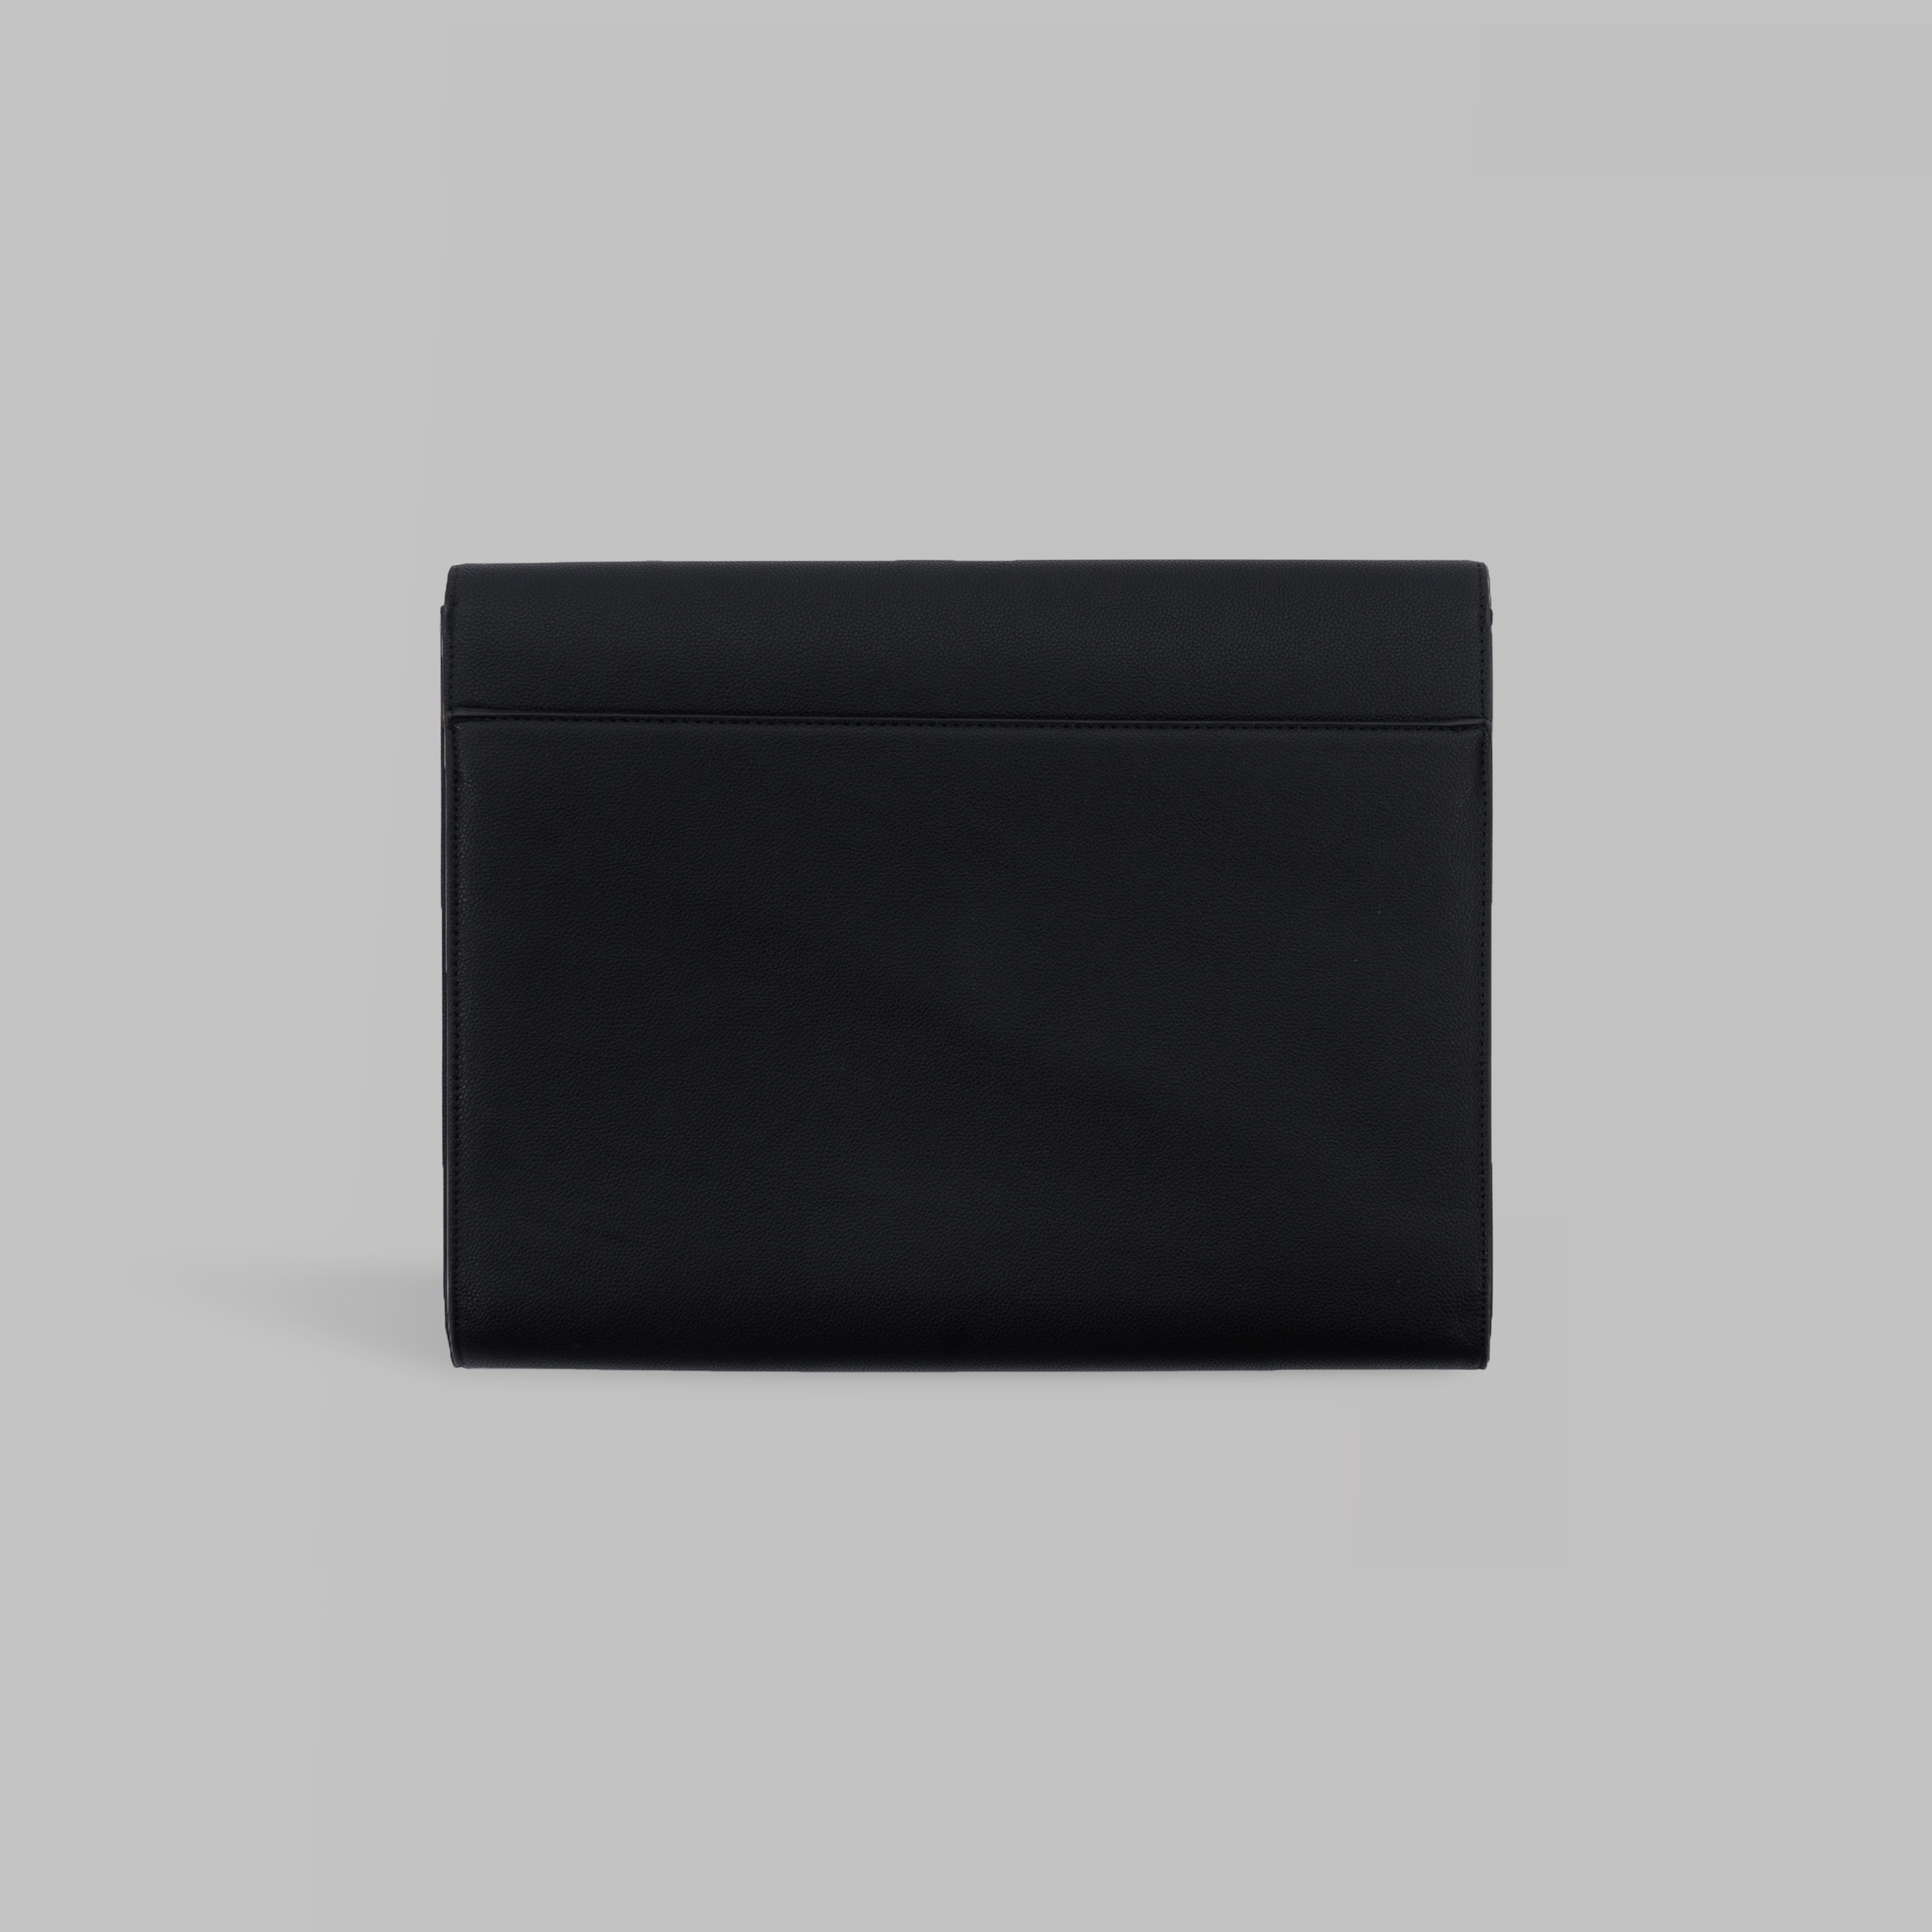 Na Rocio Her-Story Laptop Bag Black